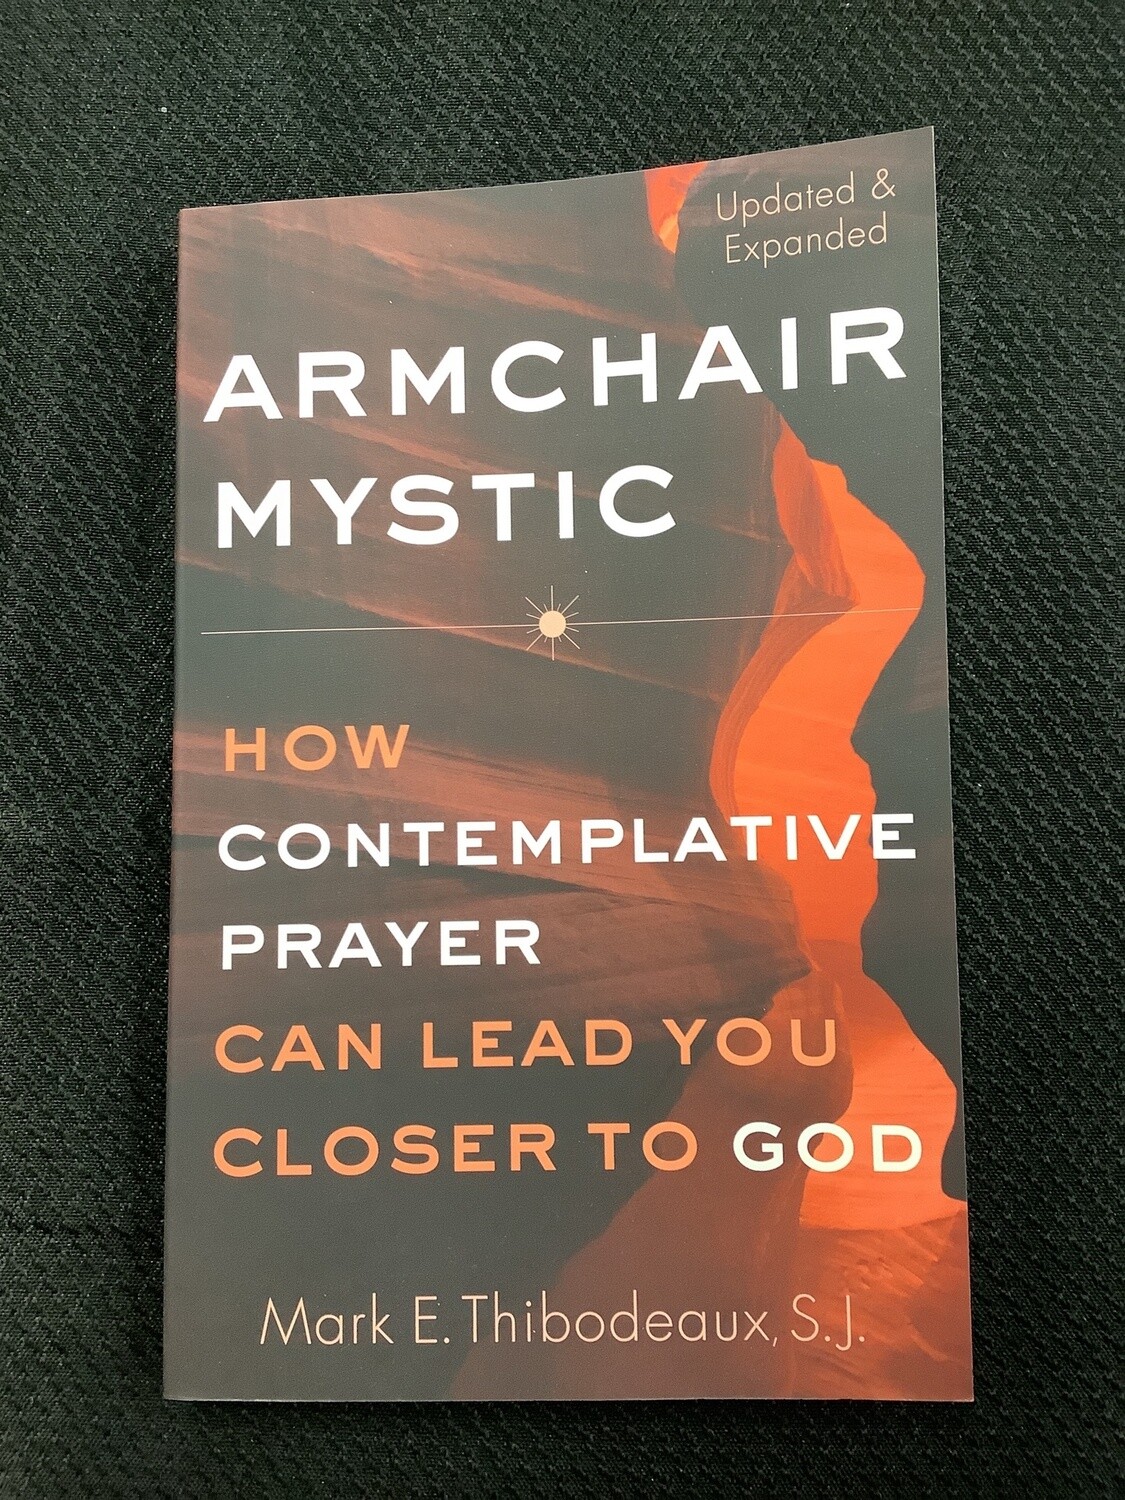 Armchair Mystic How Contemplative Prayer Can Lead You Closer to God - Mark E. Thibodeaux, S.J.